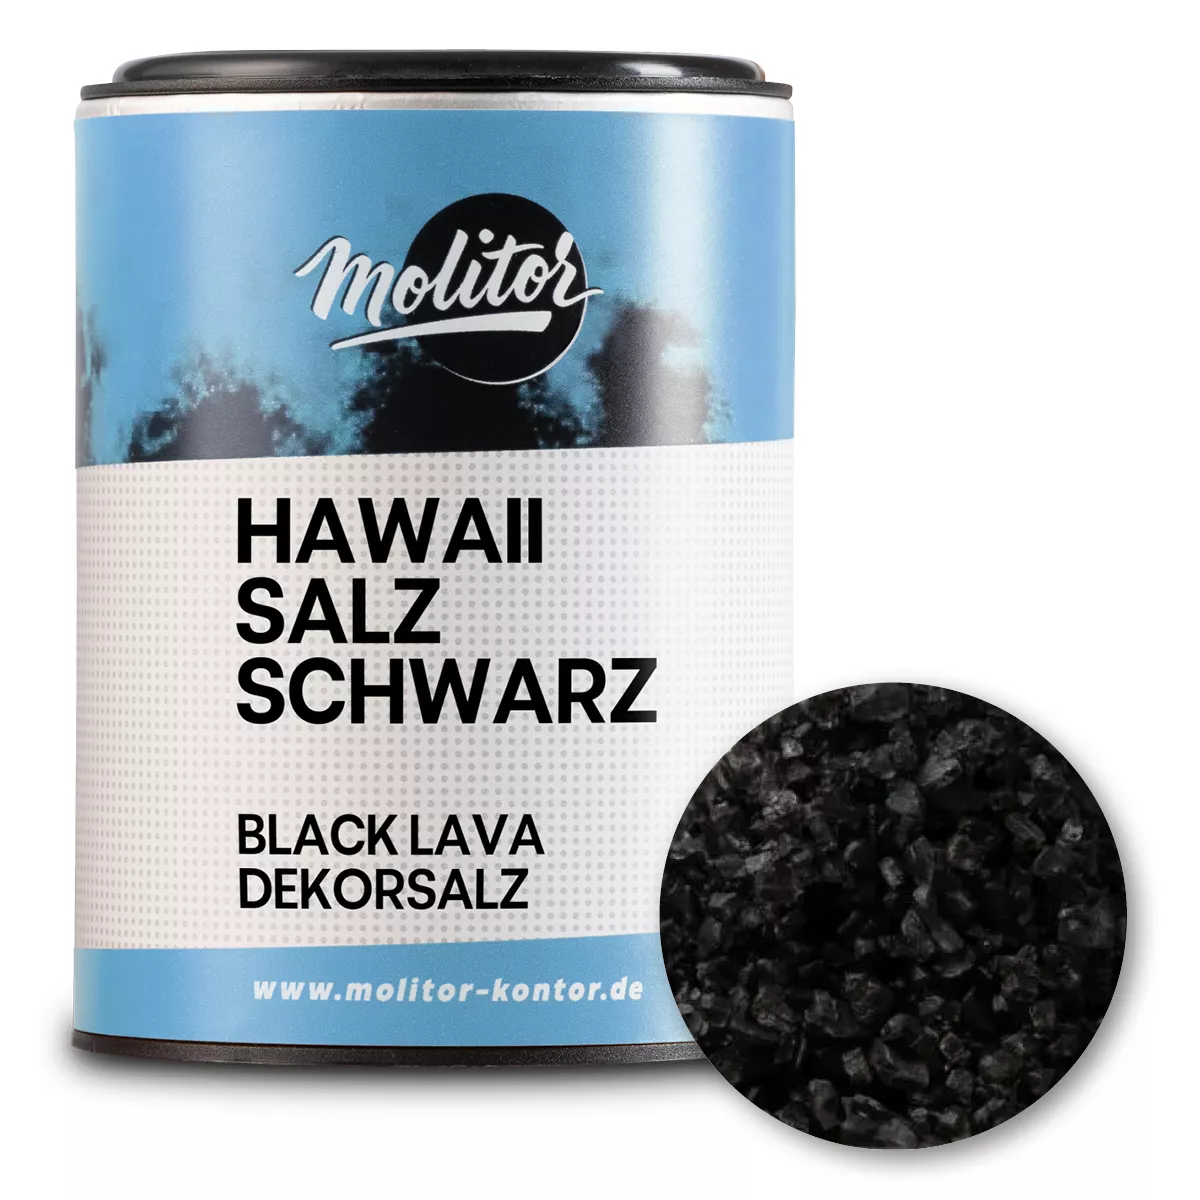 Hawaii Salz schwarz | Black Lava - Dekorsalz